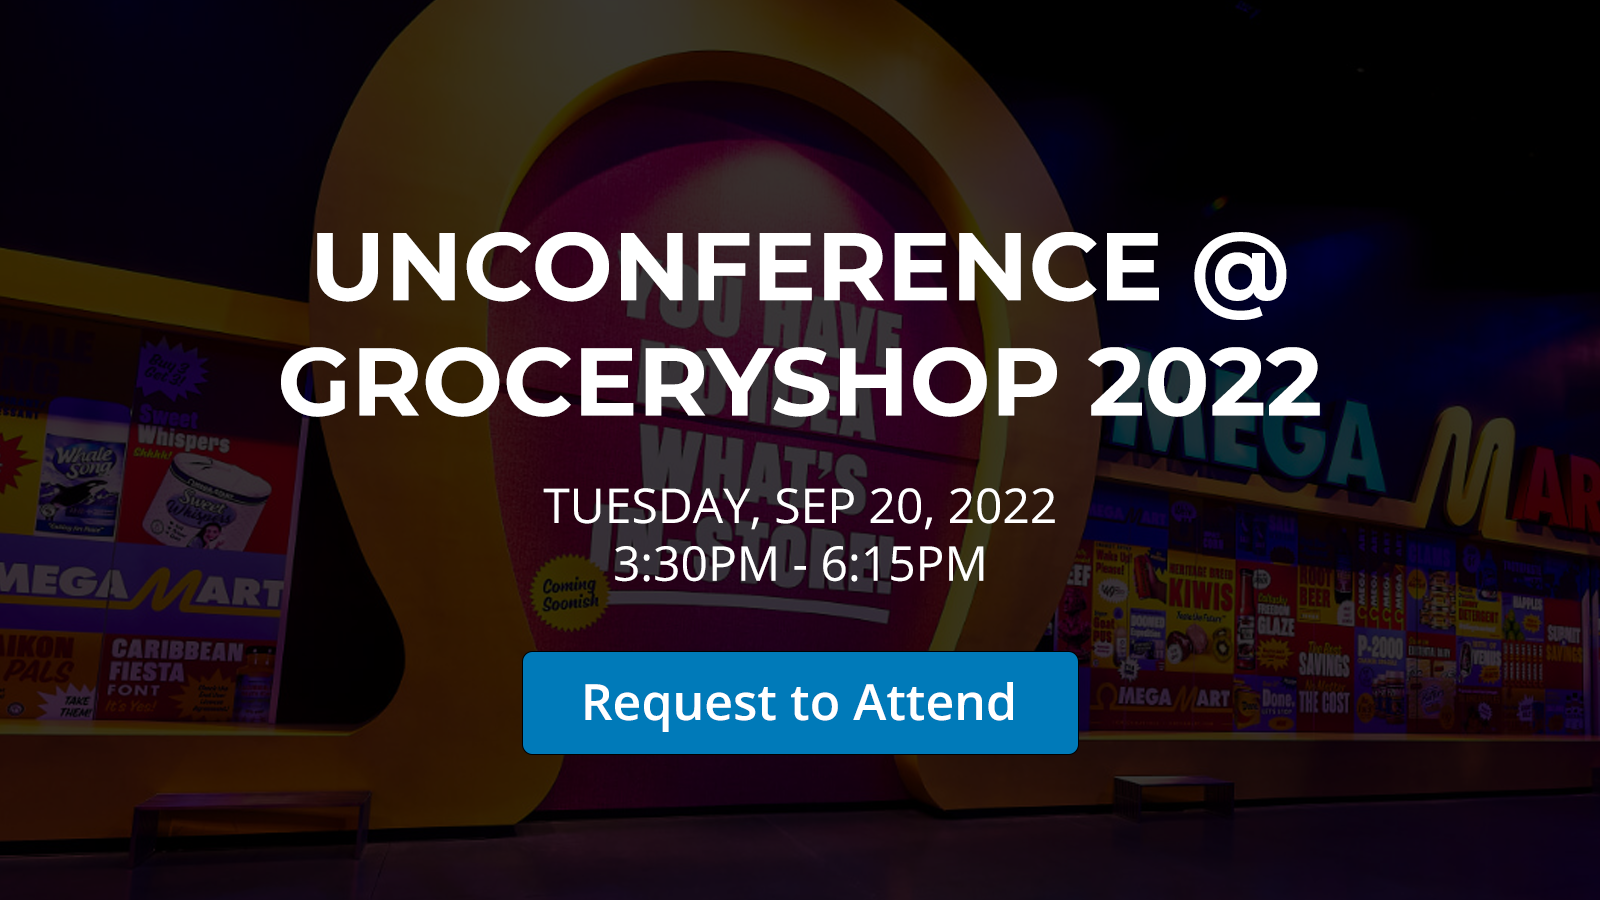 UnConference Groceryshop 2022